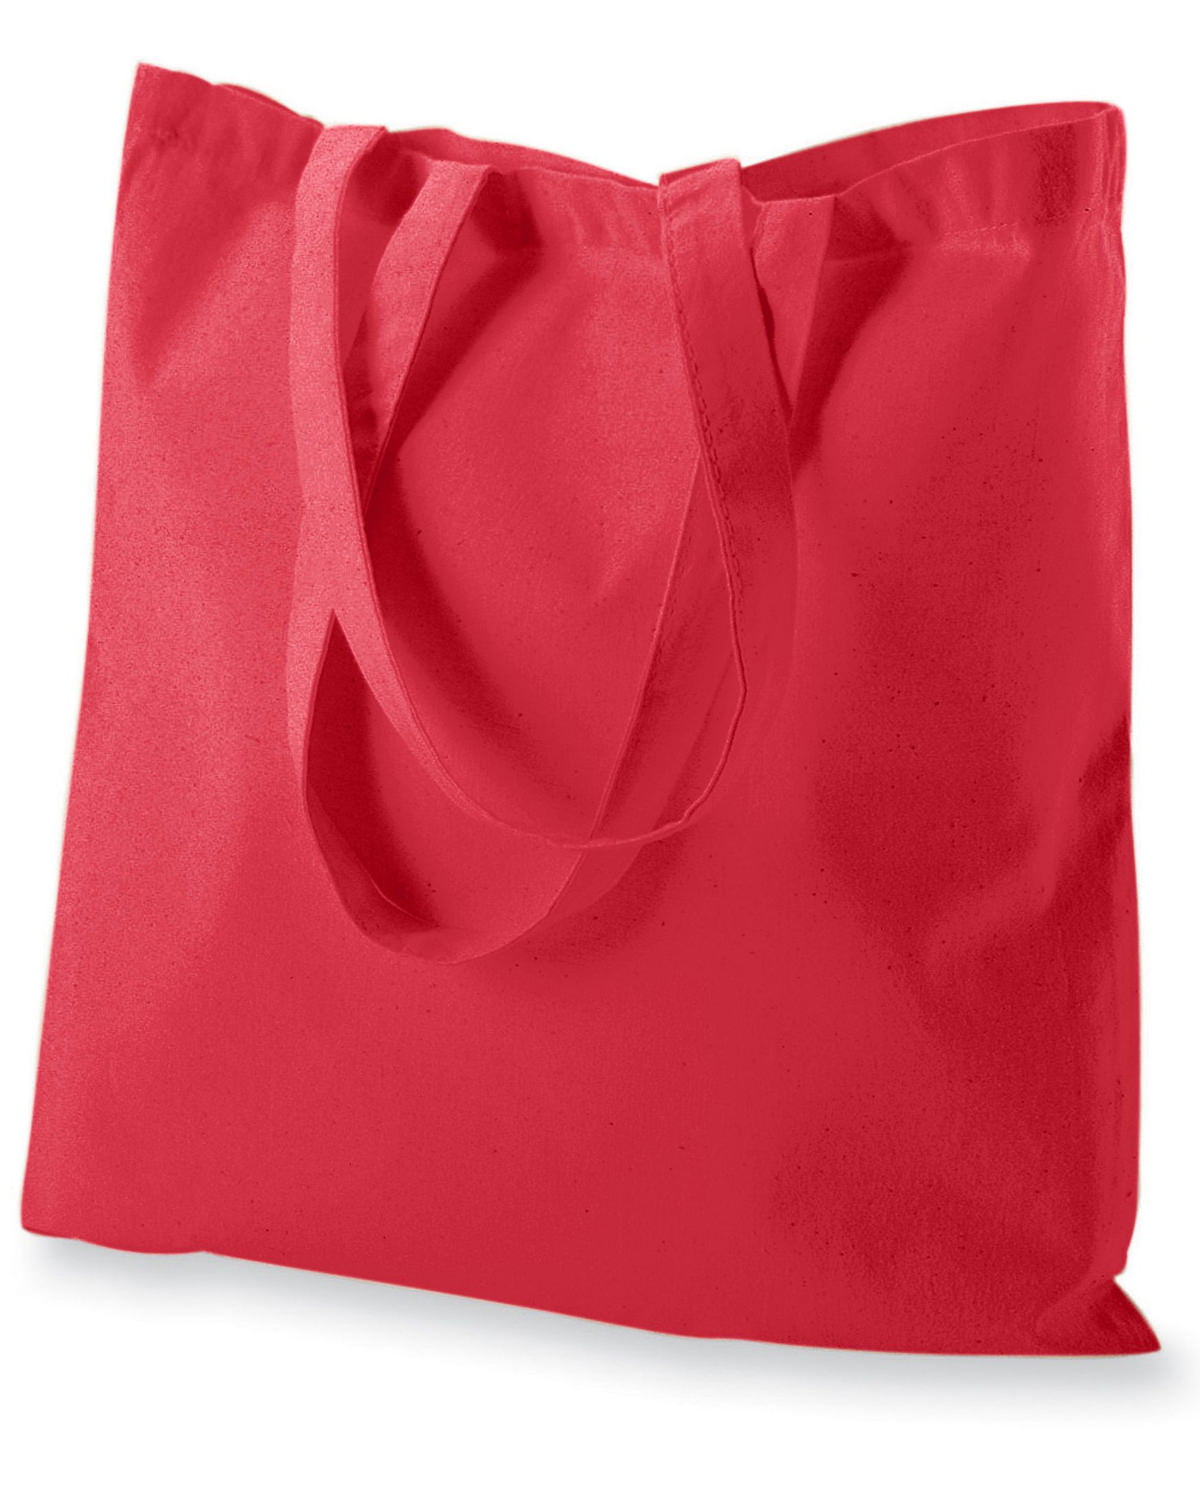 Bow Accent 2-Way Tall Shopper Tote Handbag 